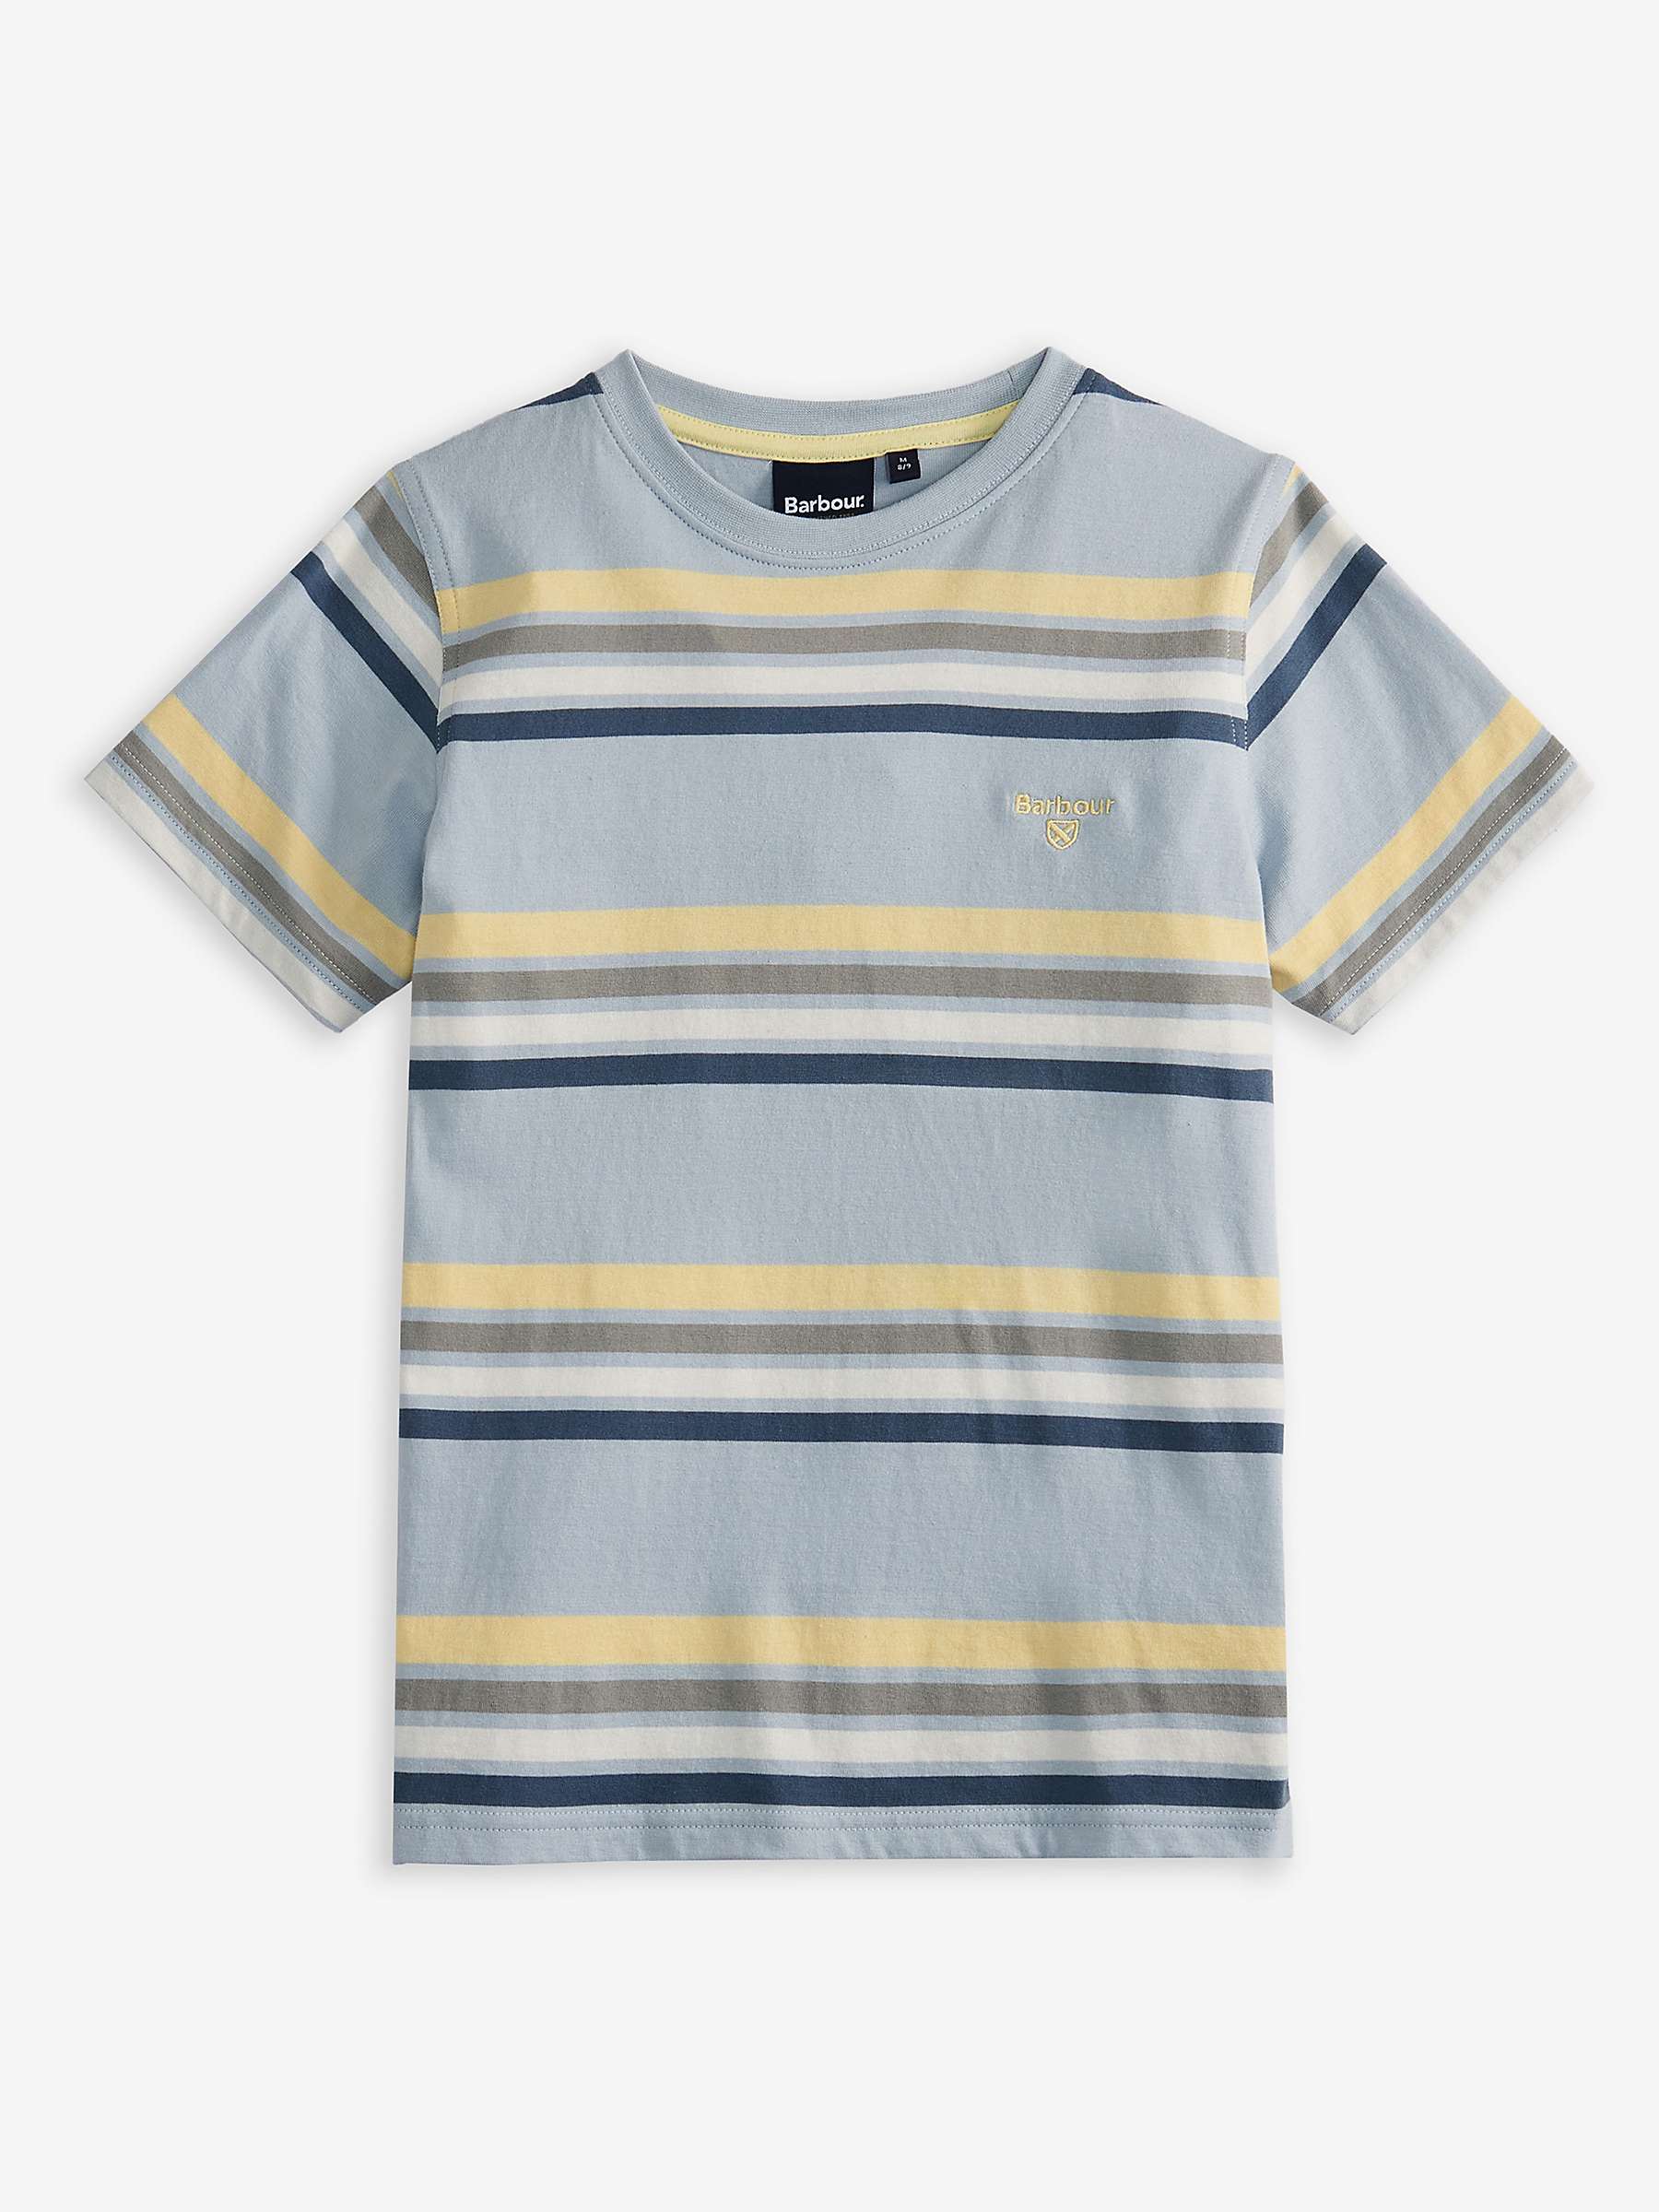 Buy Barbour Kids' Hamstead Stripe T-Shirt, Blue/Multi Online at johnlewis.com